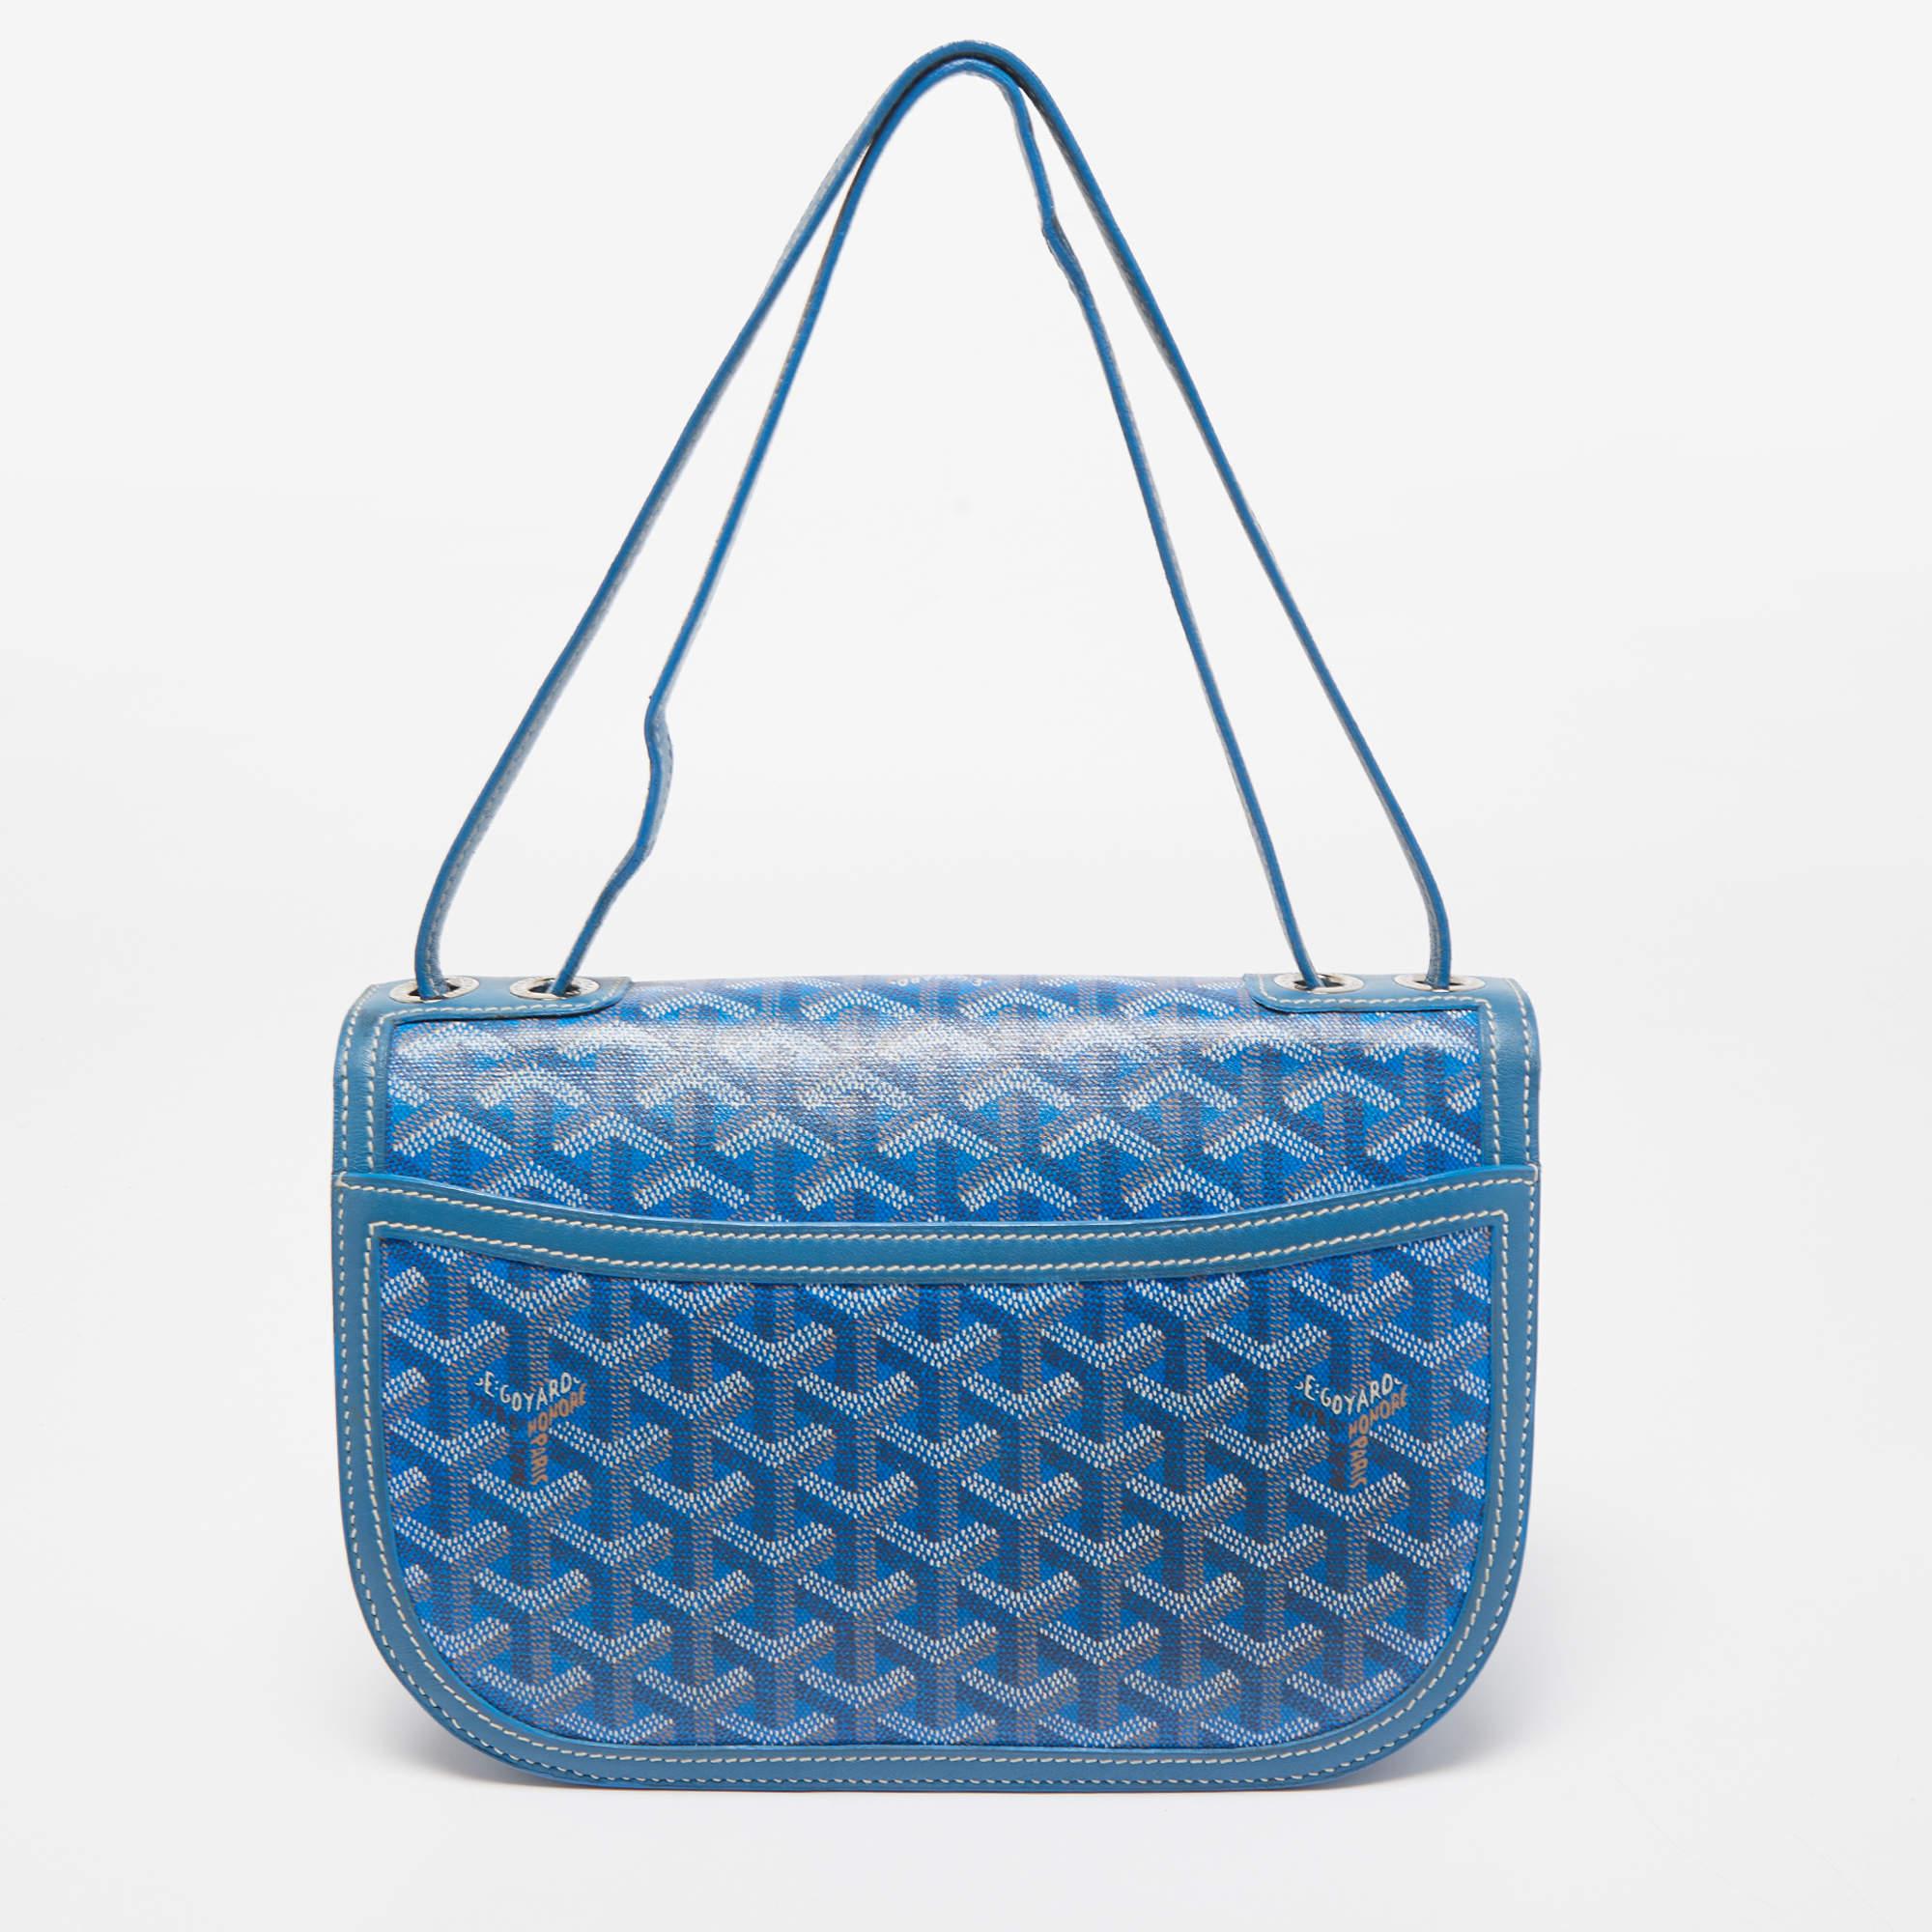 blue goyard bag price